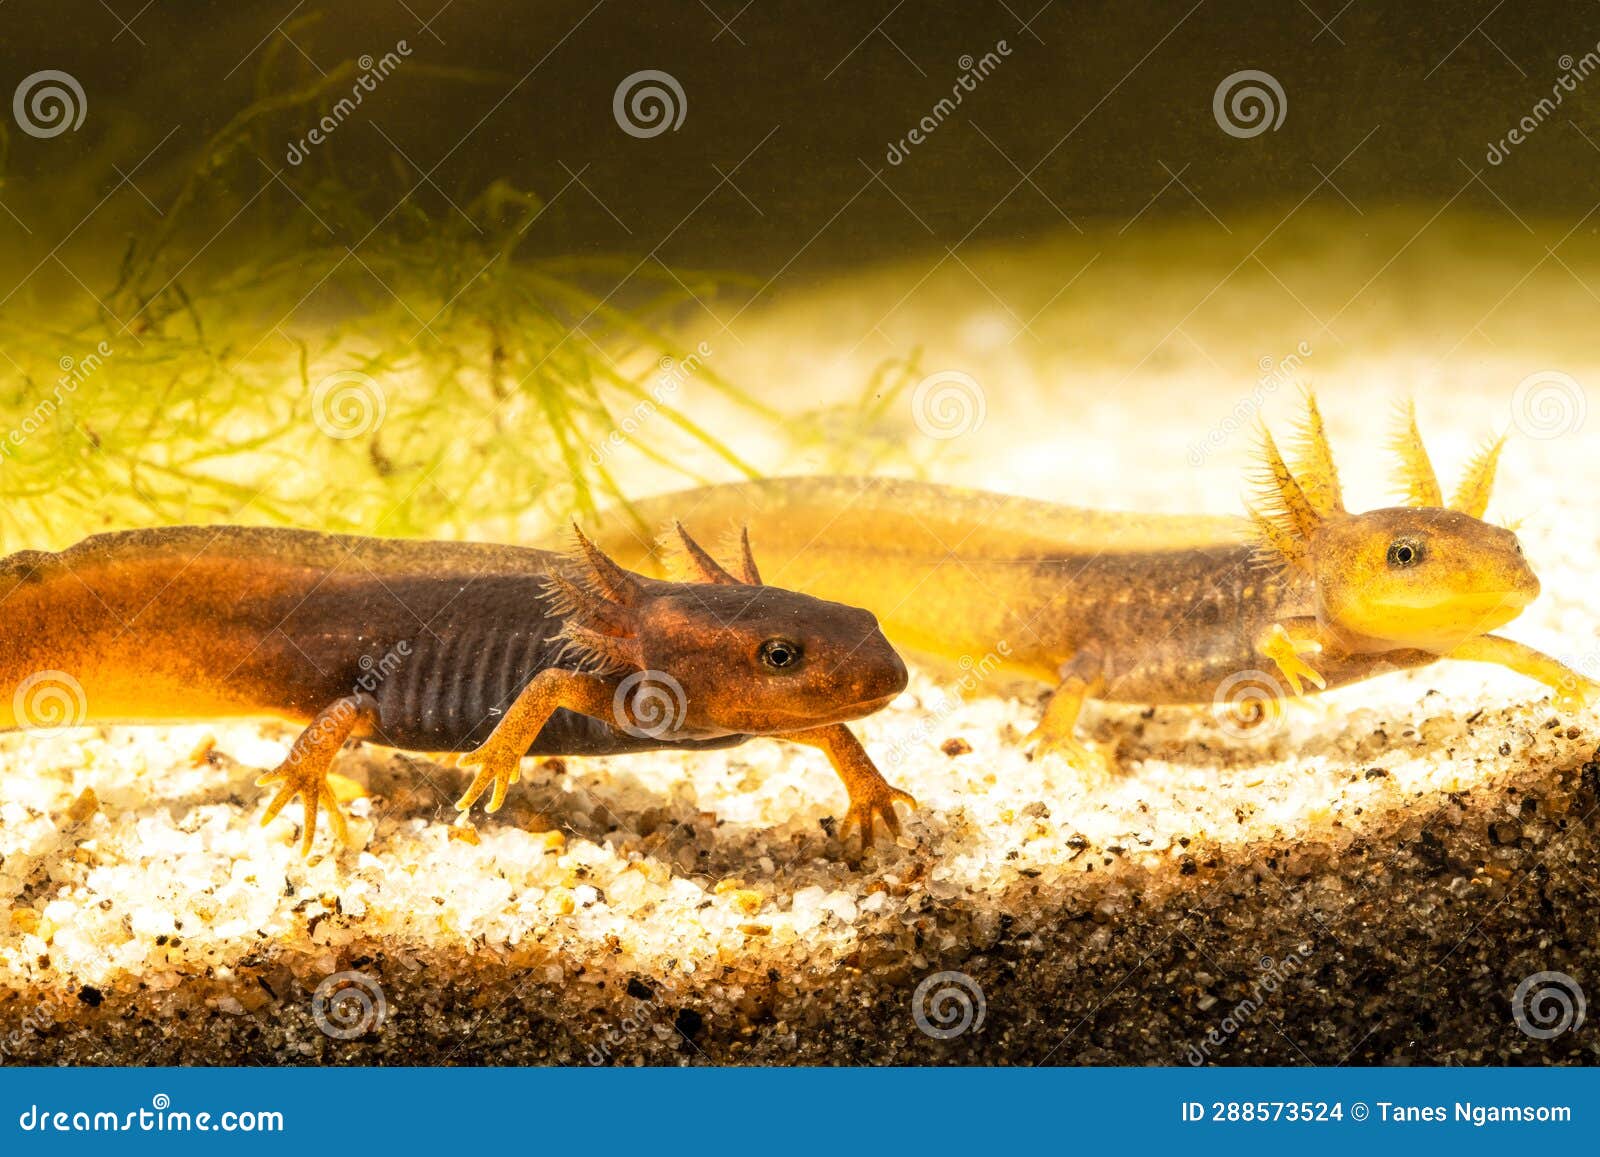 close-up of two baby himalayan newts or himalayan salamanders